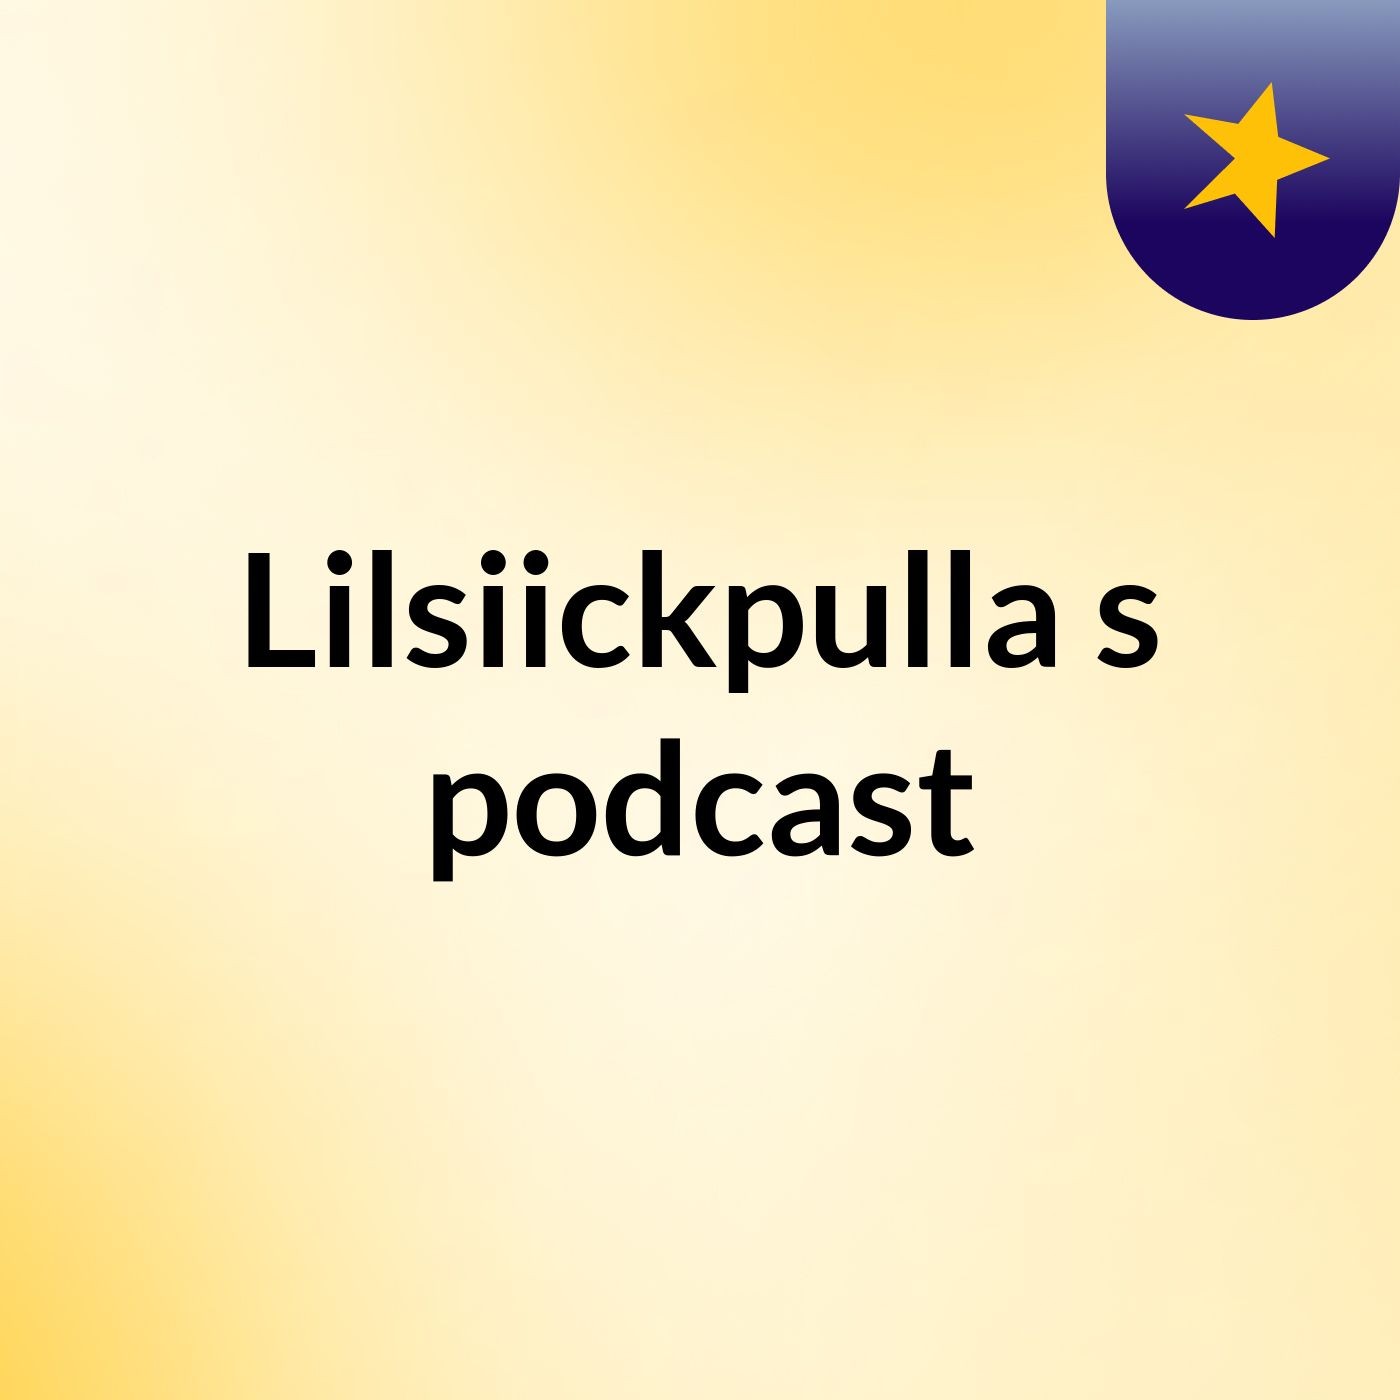 Lilsiickpulla's podcast